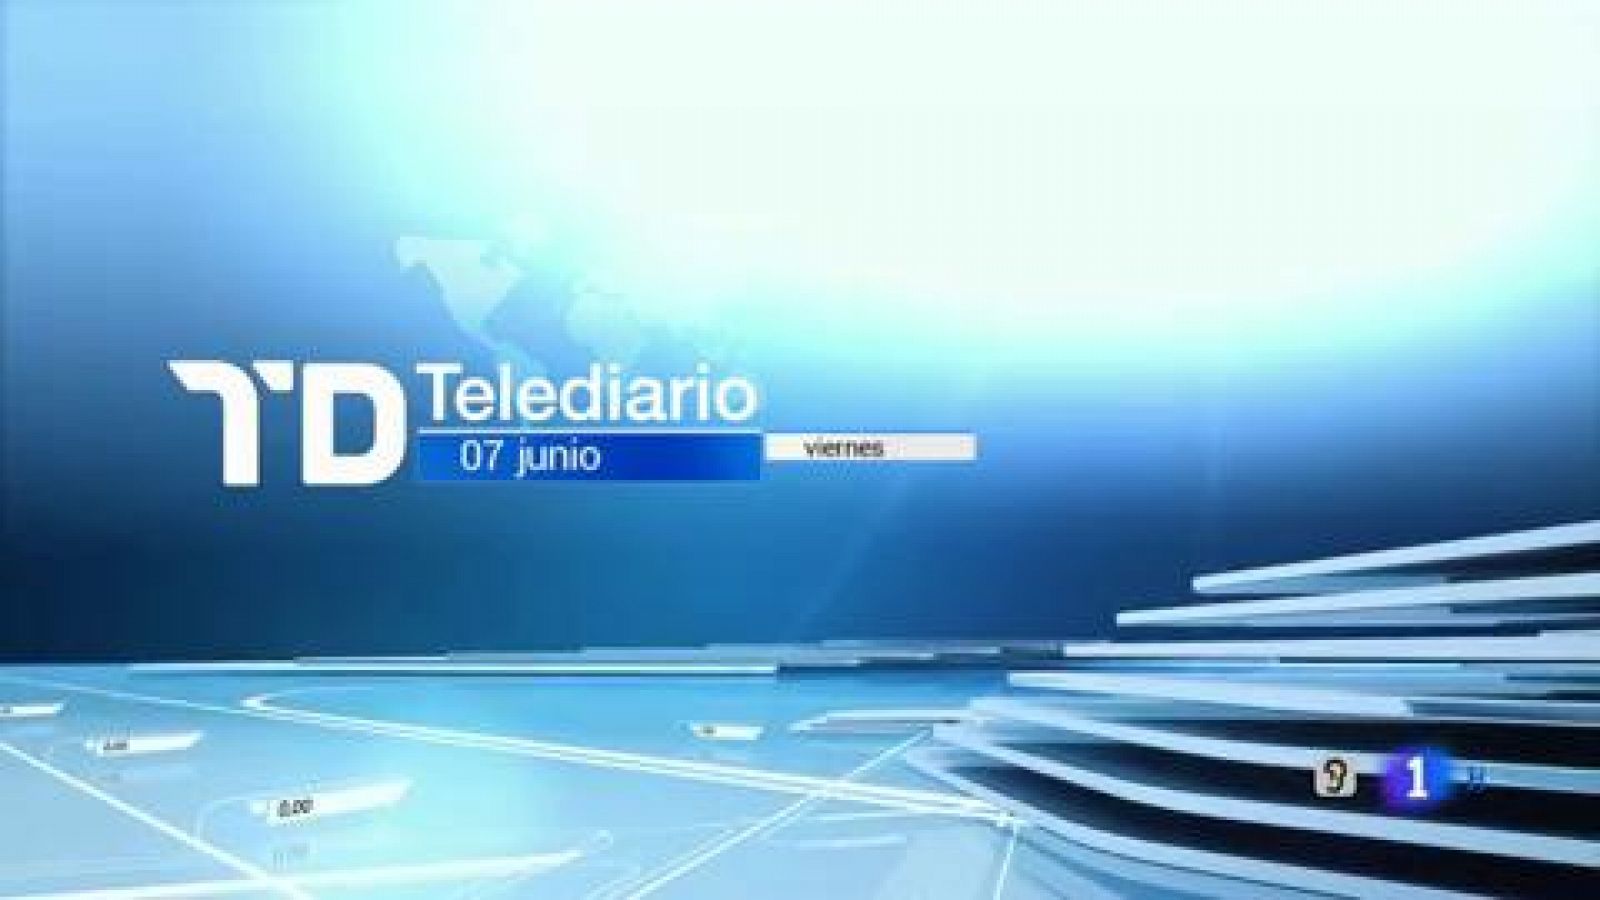 Telediario 1: Telediario 2 en 4' - 07/06/19 | RTVE Play